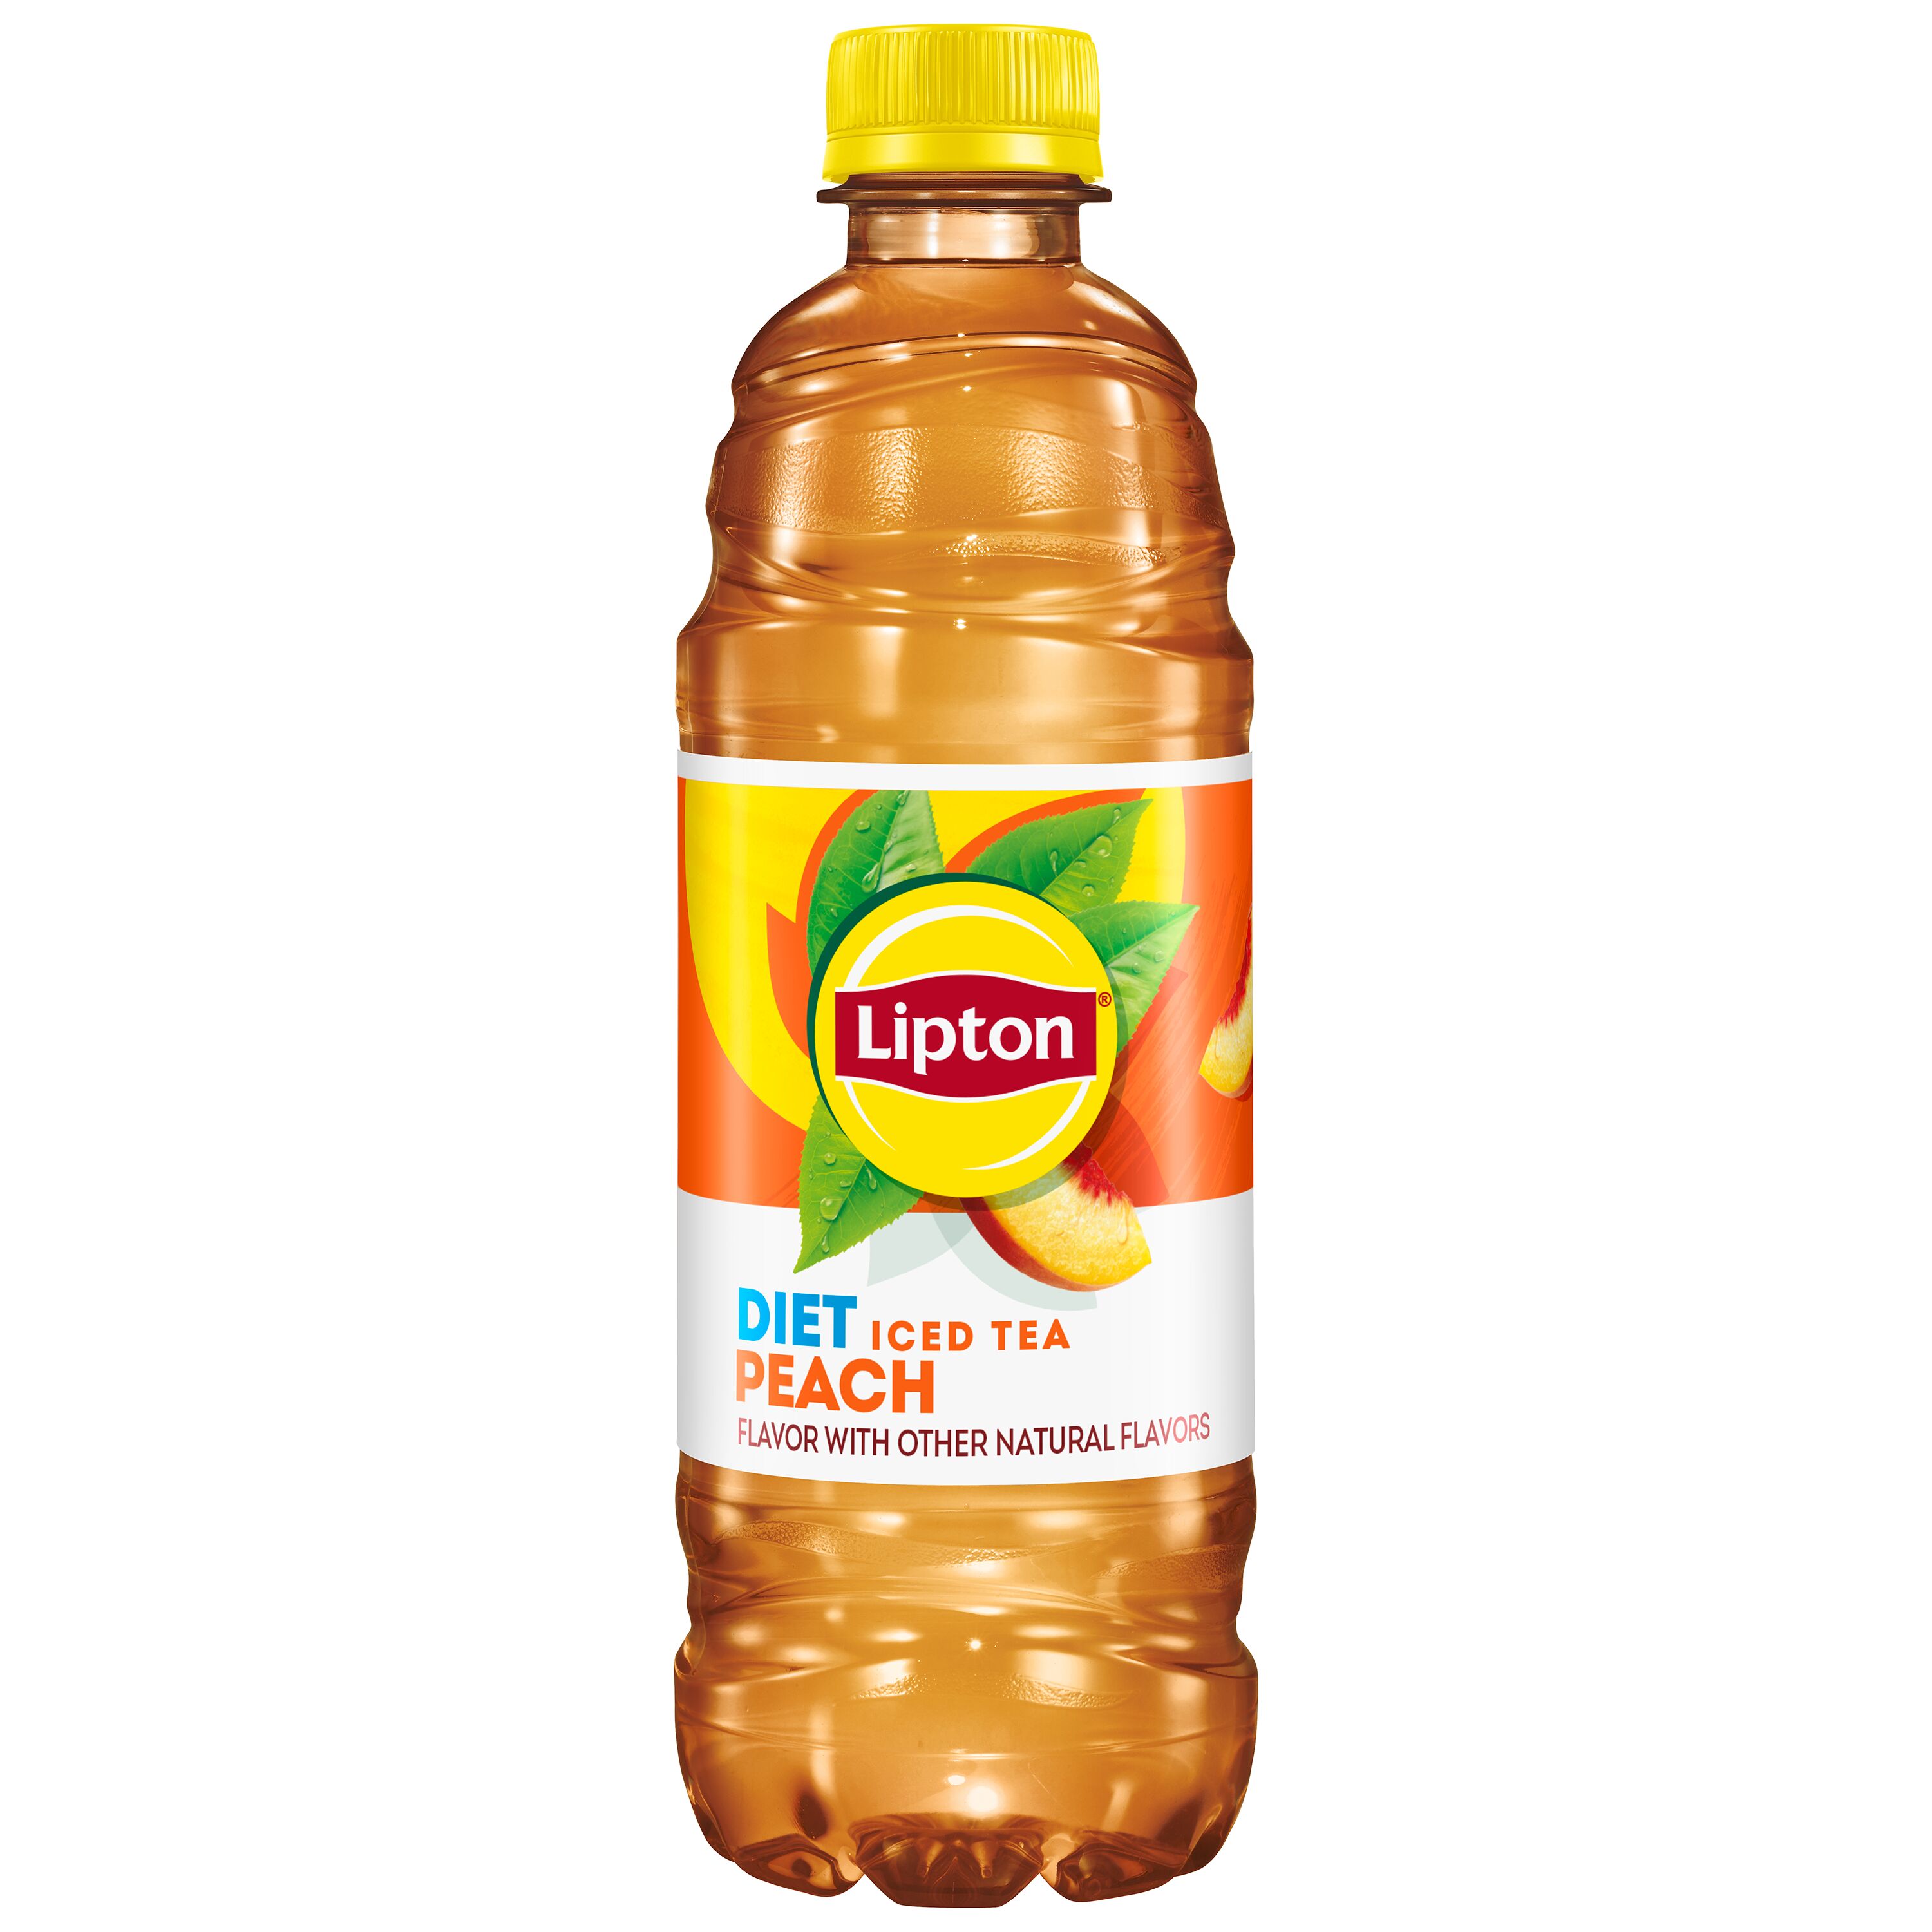 Lipton Diet Peach Iced Tea, 16.9 fl oz, 12 Pack Bottles - image 4 of 6